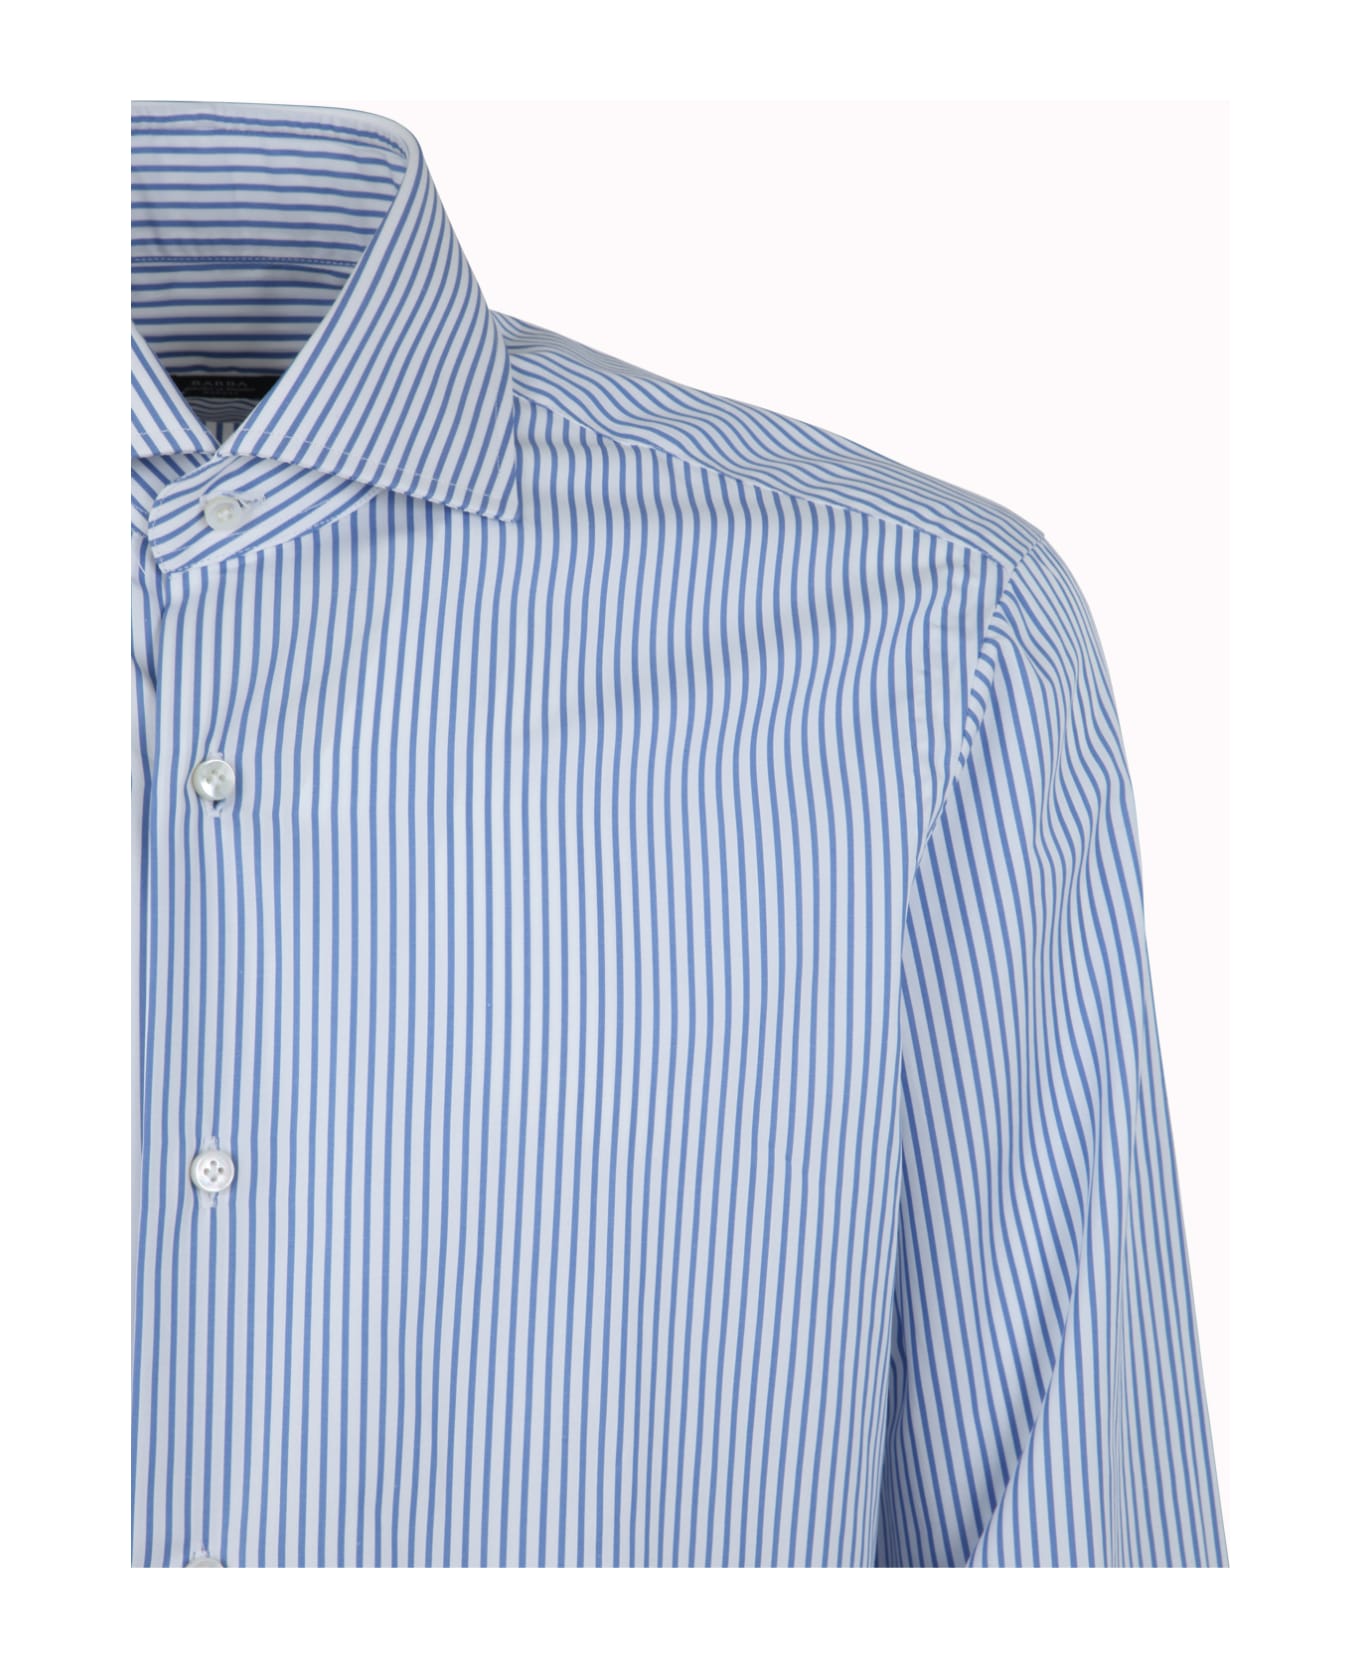 Barba Napoli Small Stripe Shirt - White Light Blue